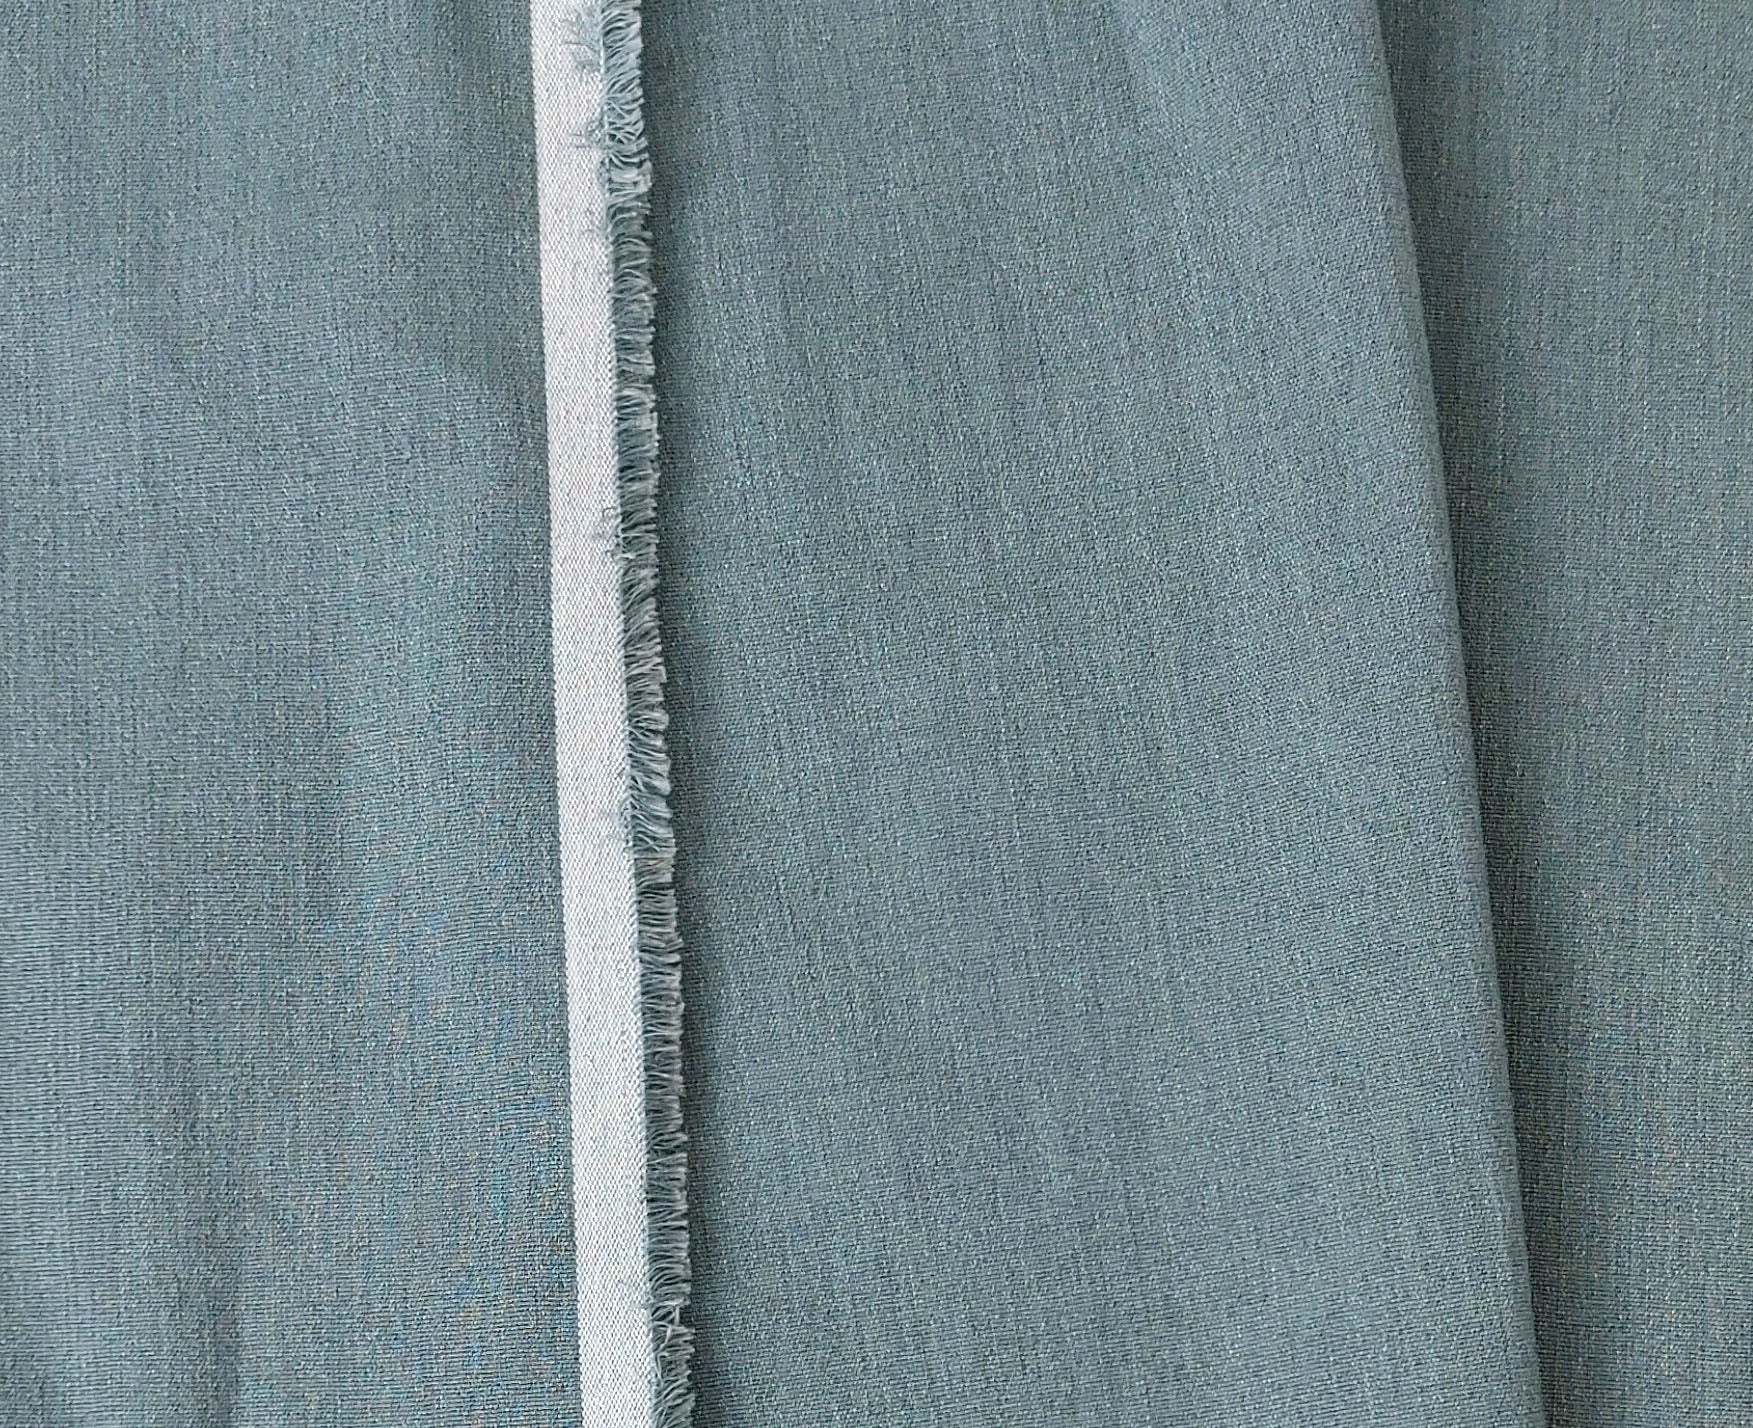 Donna Linen - High Density Linen Rayon Stretch Fabric 4025 4024 5982 4803 4579 4578 4023 3978 - The Linen Lab - Green